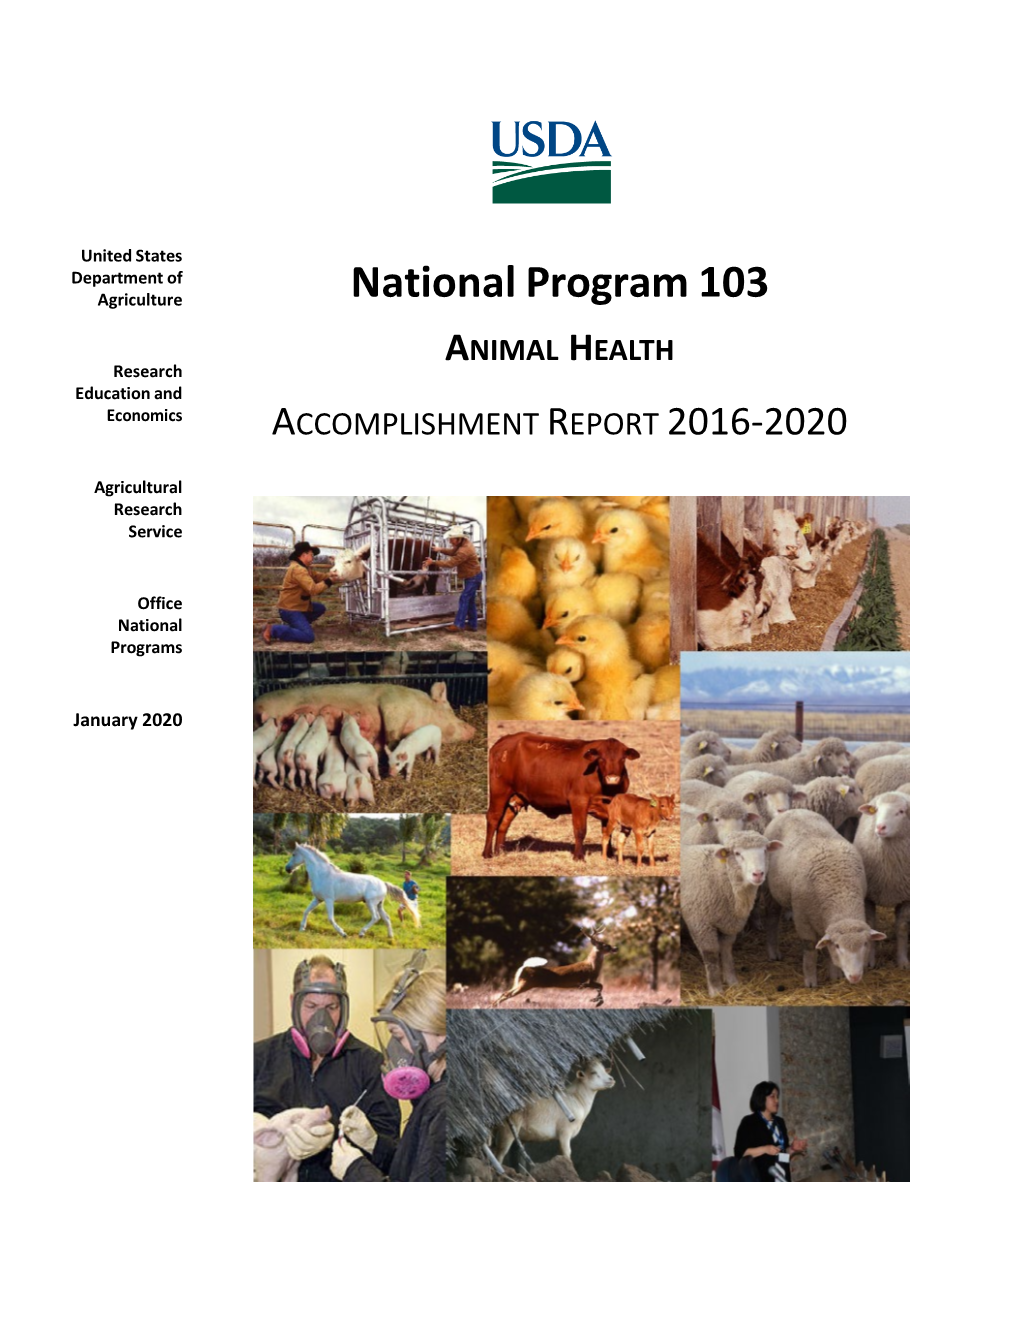 Accomplishment Report 2016-2020